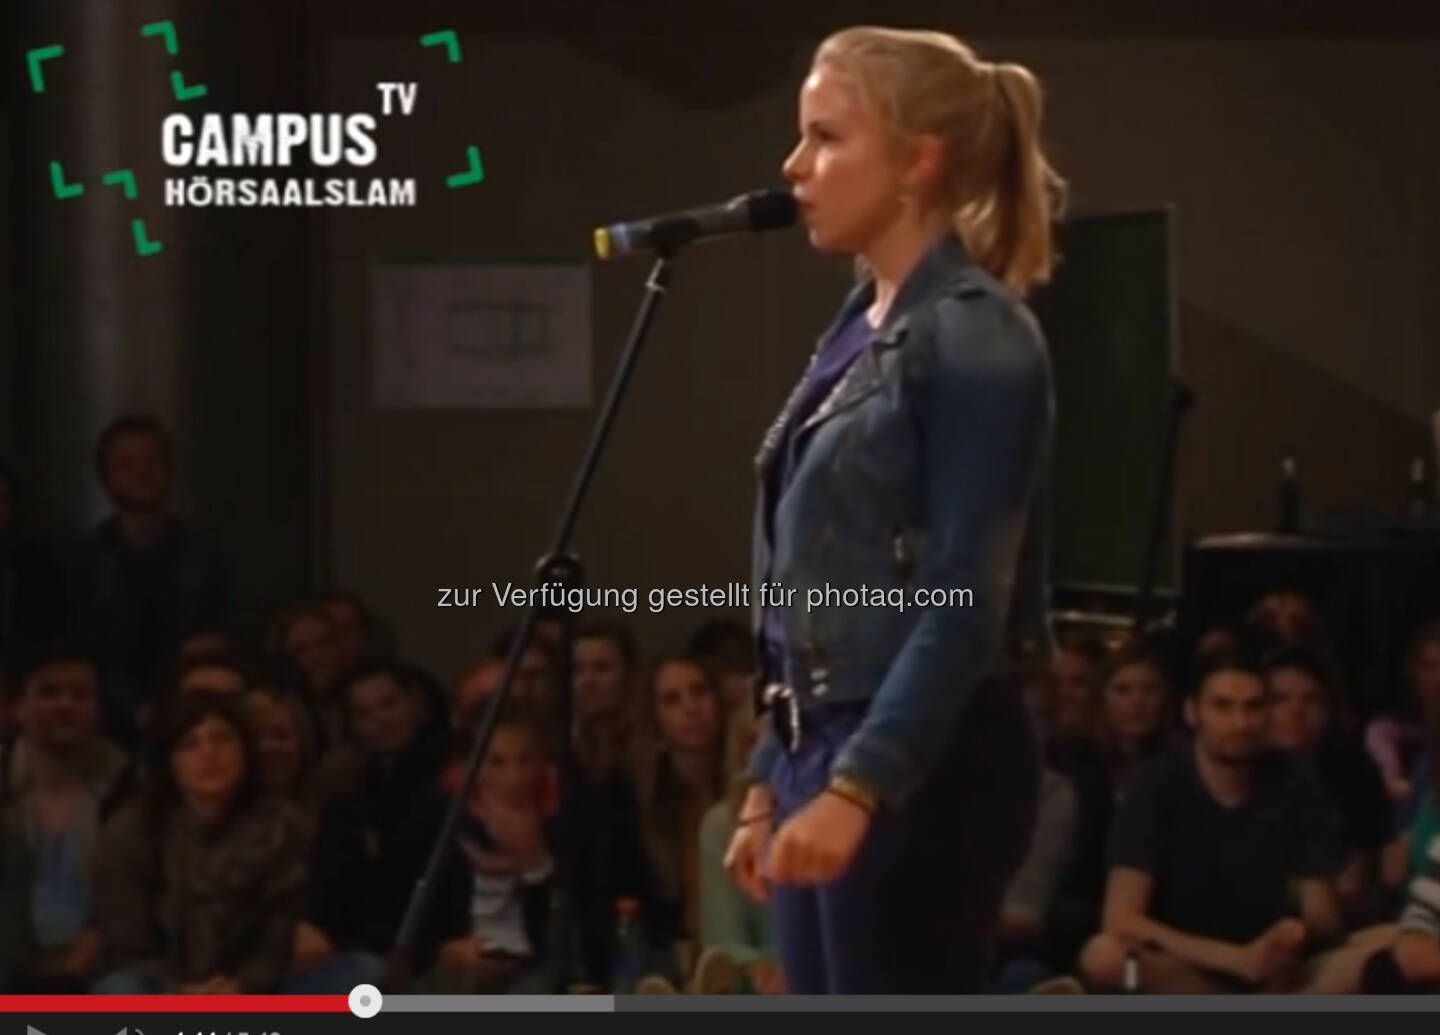 Hörsaal-Slammerin Julia Engelmann wird zum Medienhype - http://www.youtube.com/watch?v=DoxqZWvt7g8